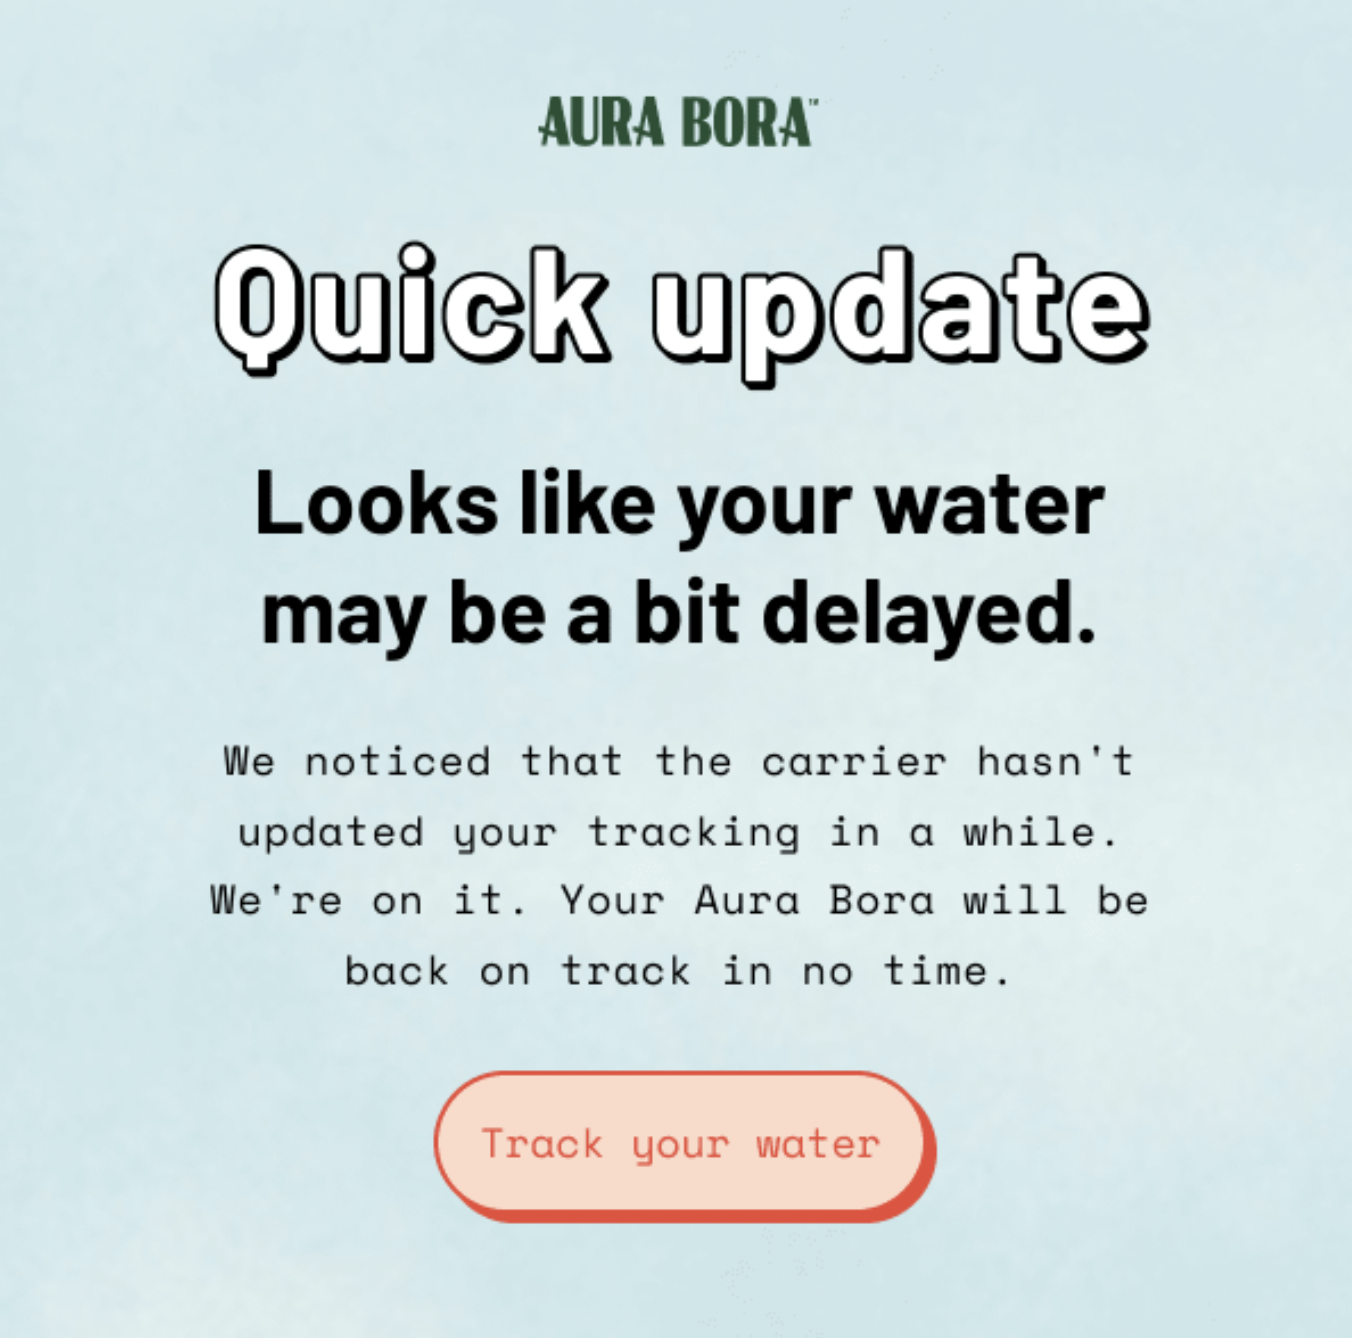 Delayed shipment transactional email from Aura Bora